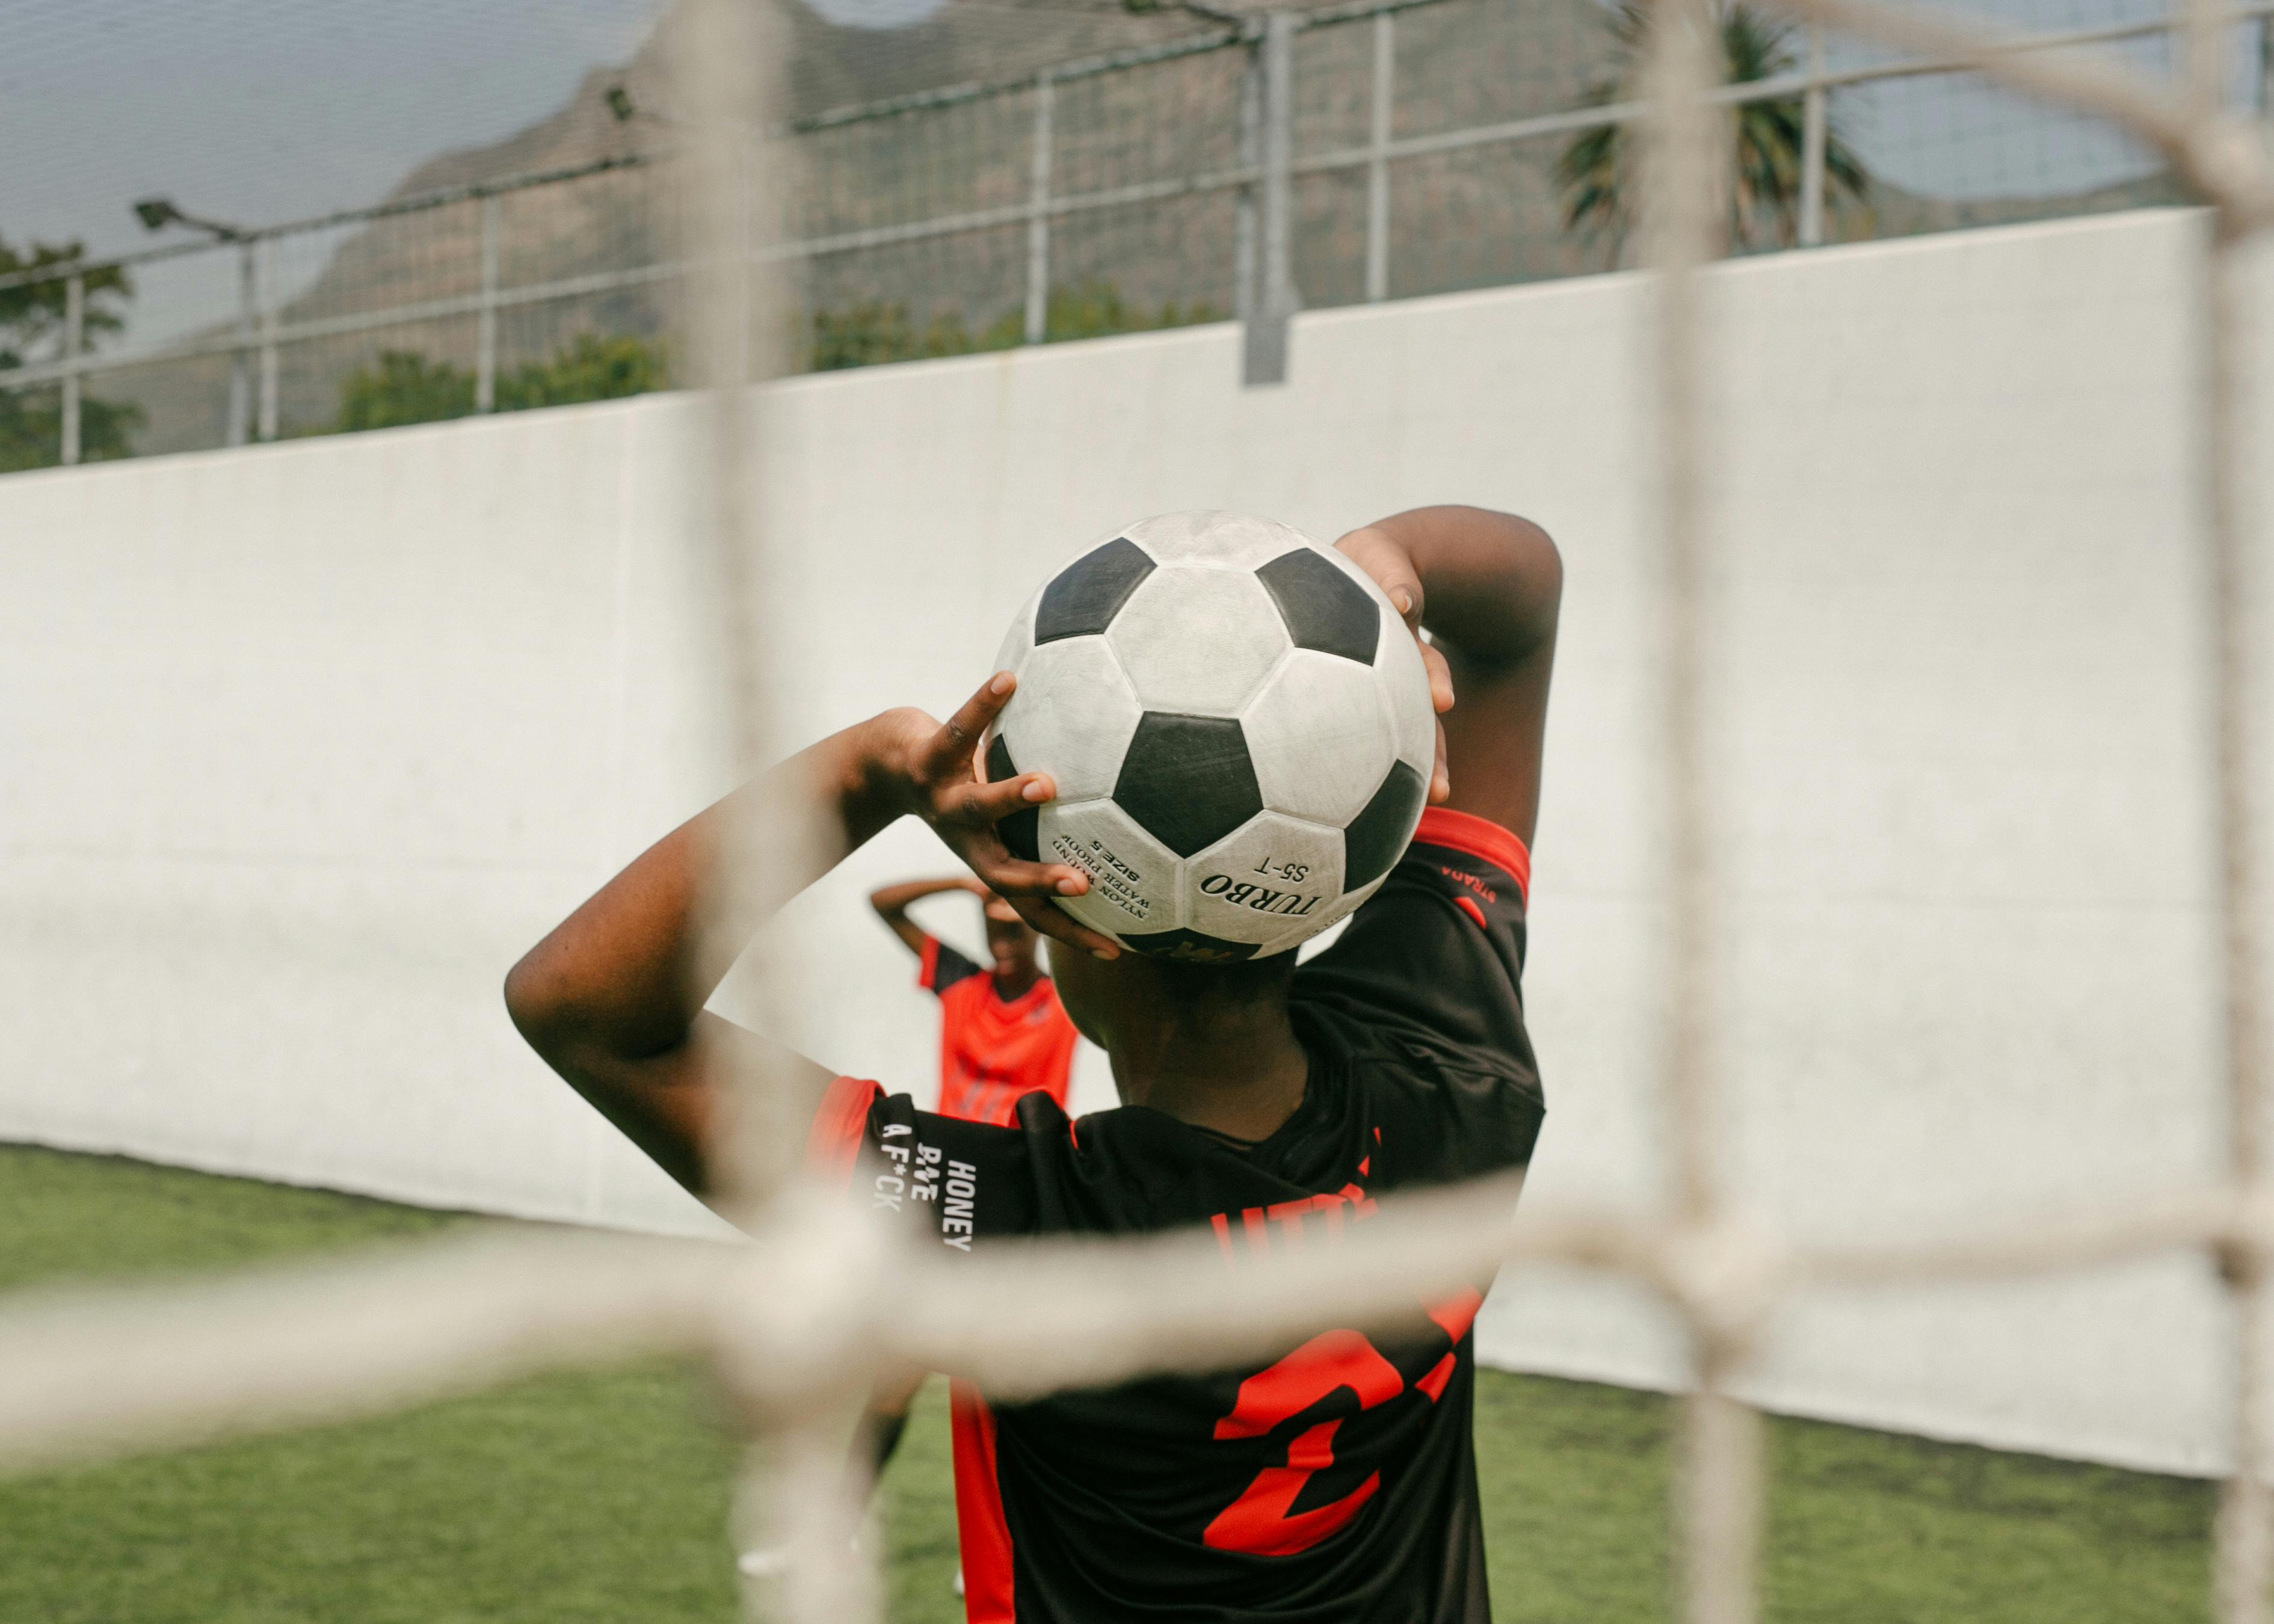 a player holding a soccer ball